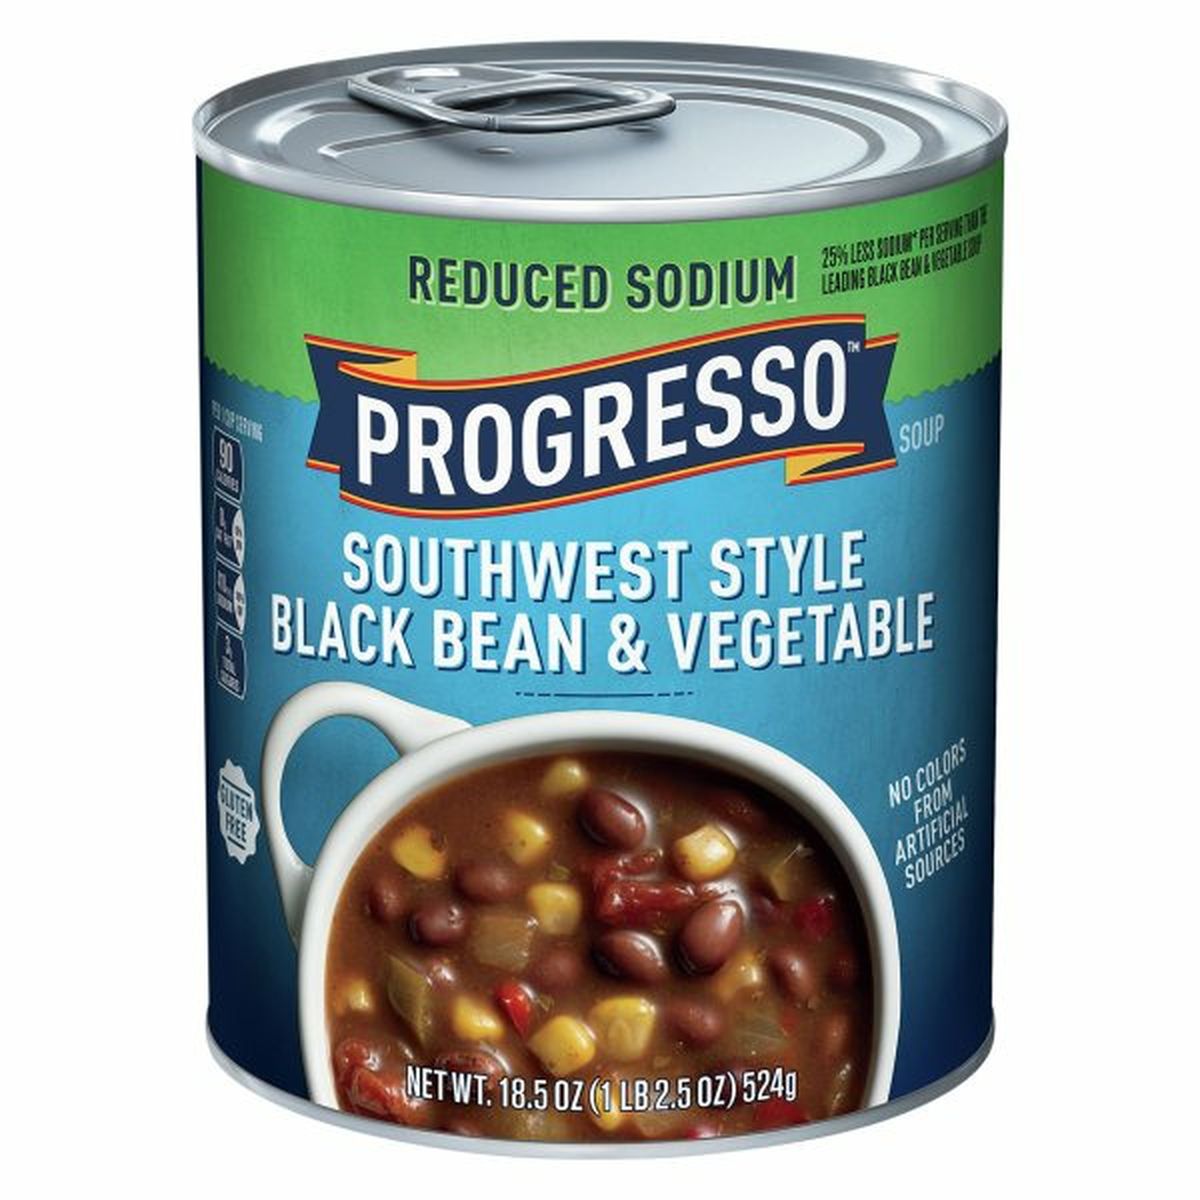 Calories in Progresso Soup, Reduced Sodium, Black Bean & Vegetable, Southwest Style